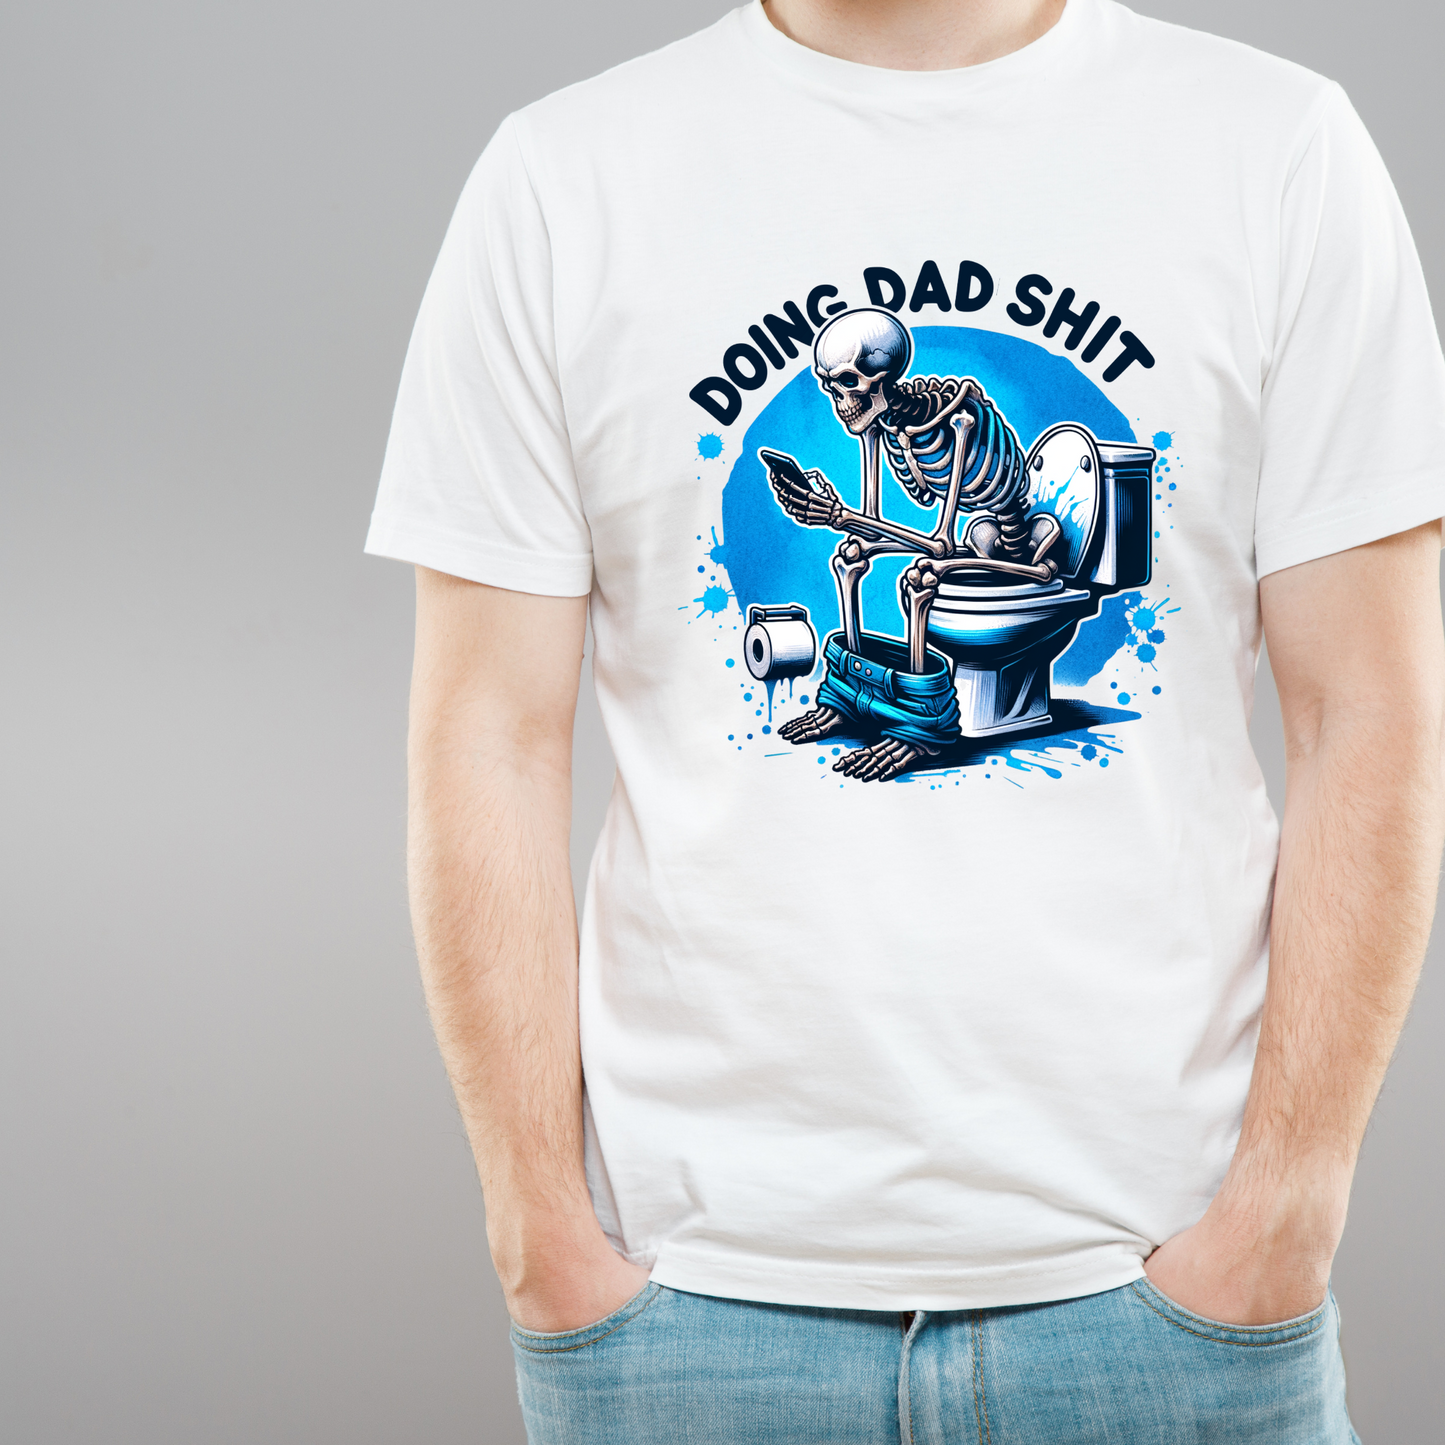 "Doing Dad Shit" - Funny Dad Shirt